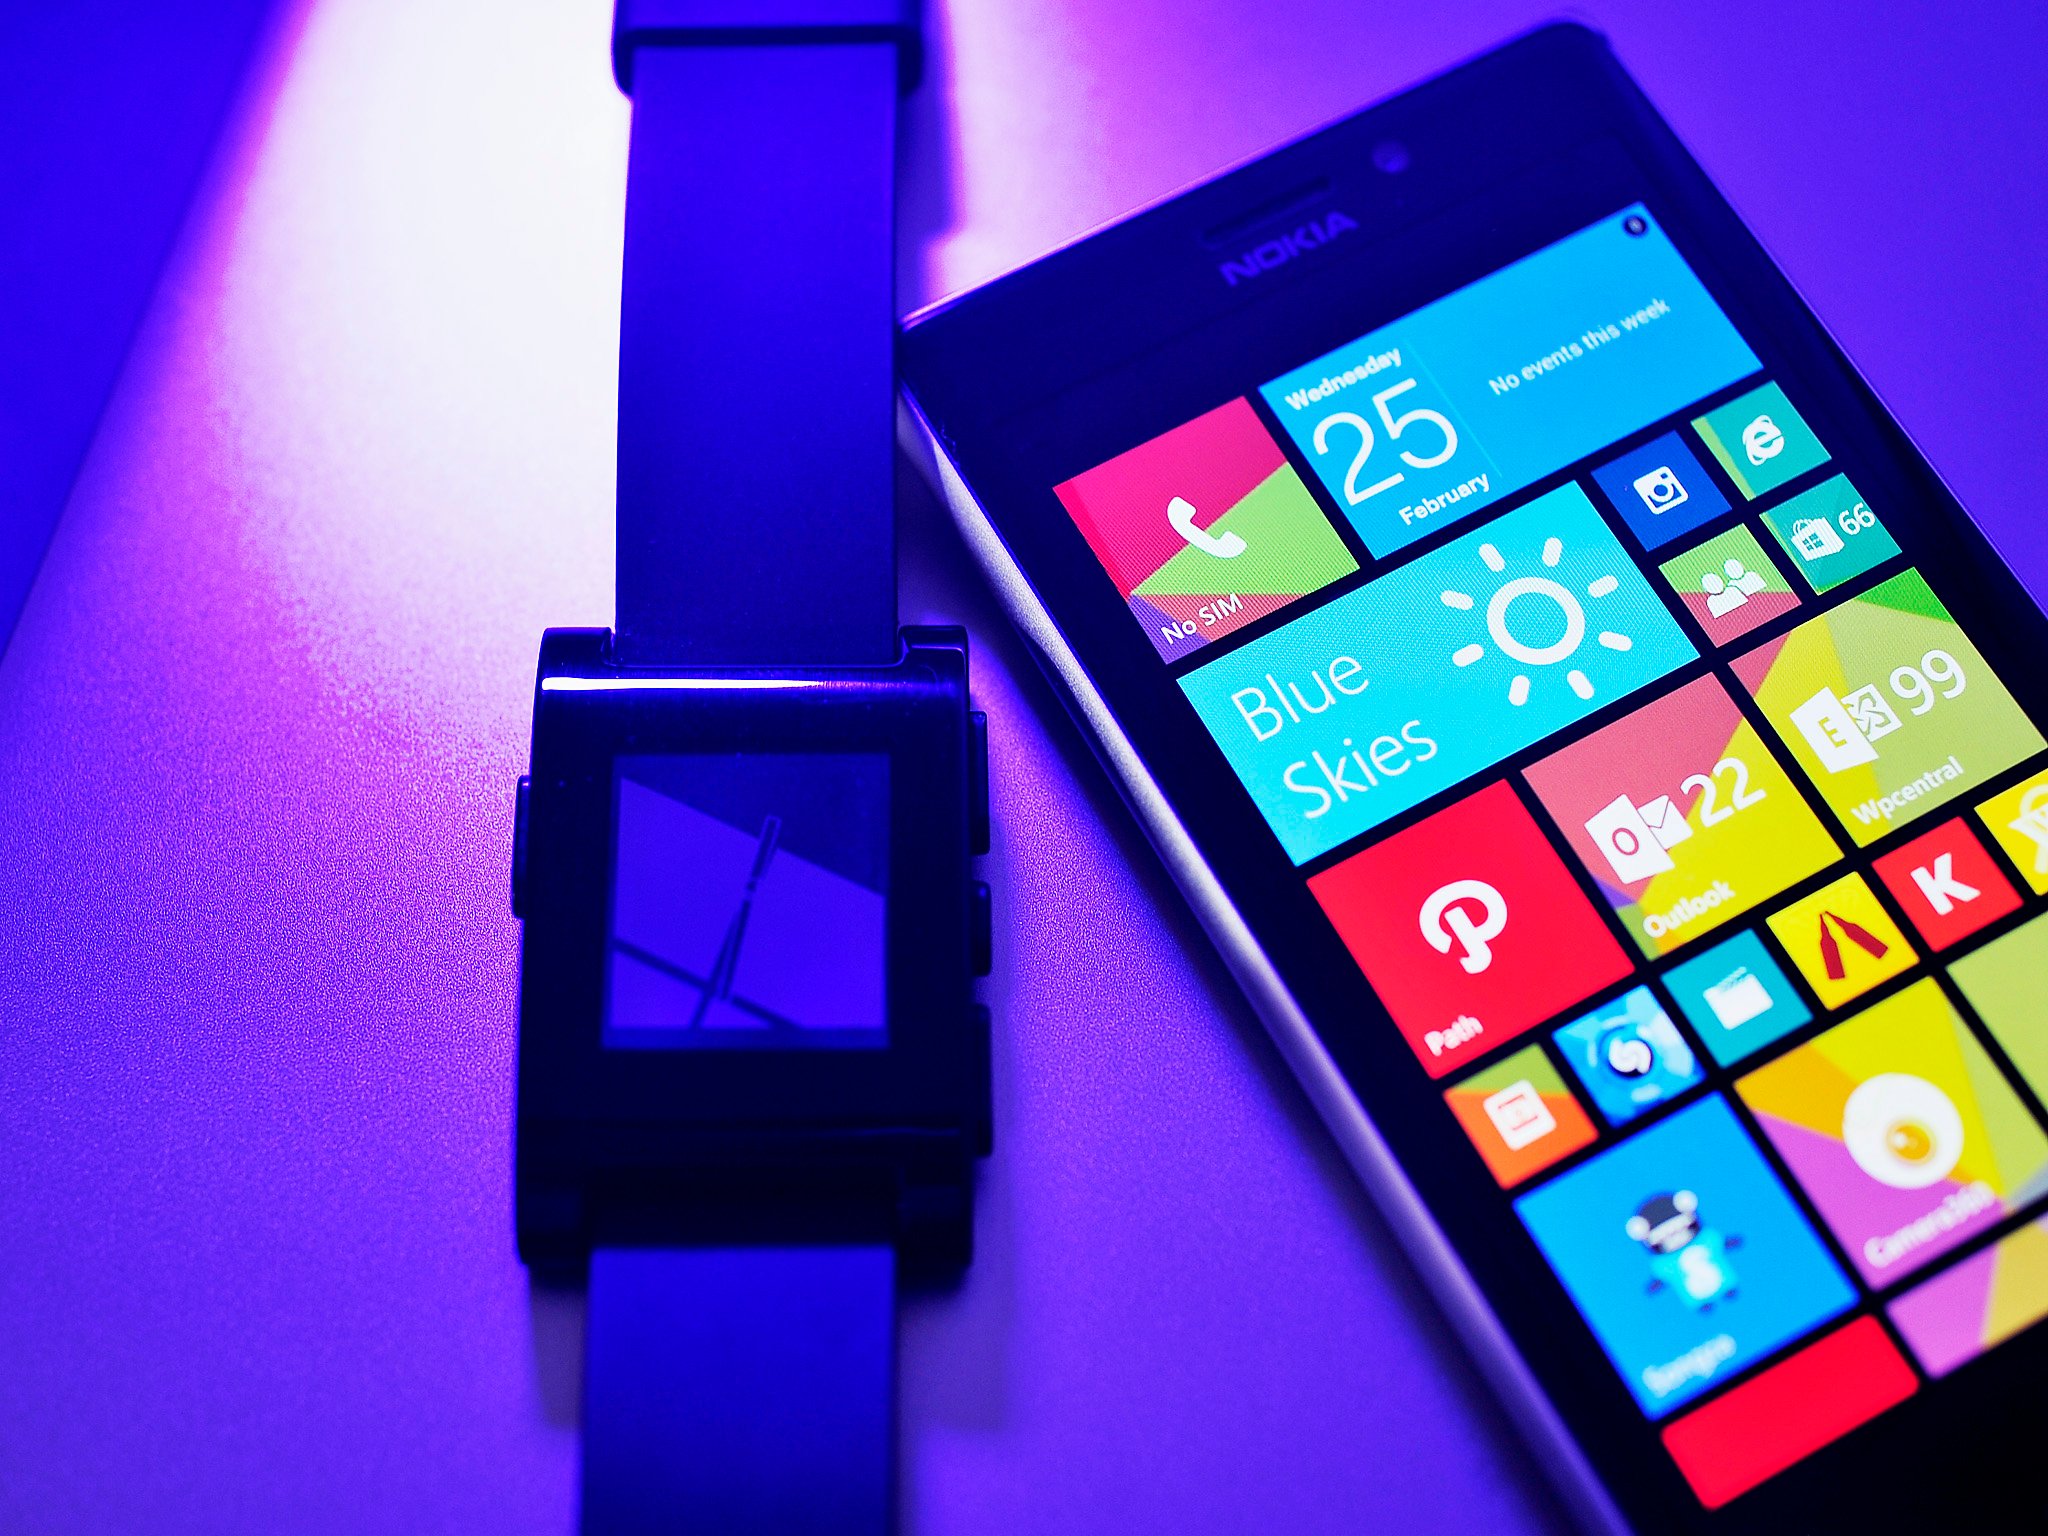 Pebble and Windows Phone